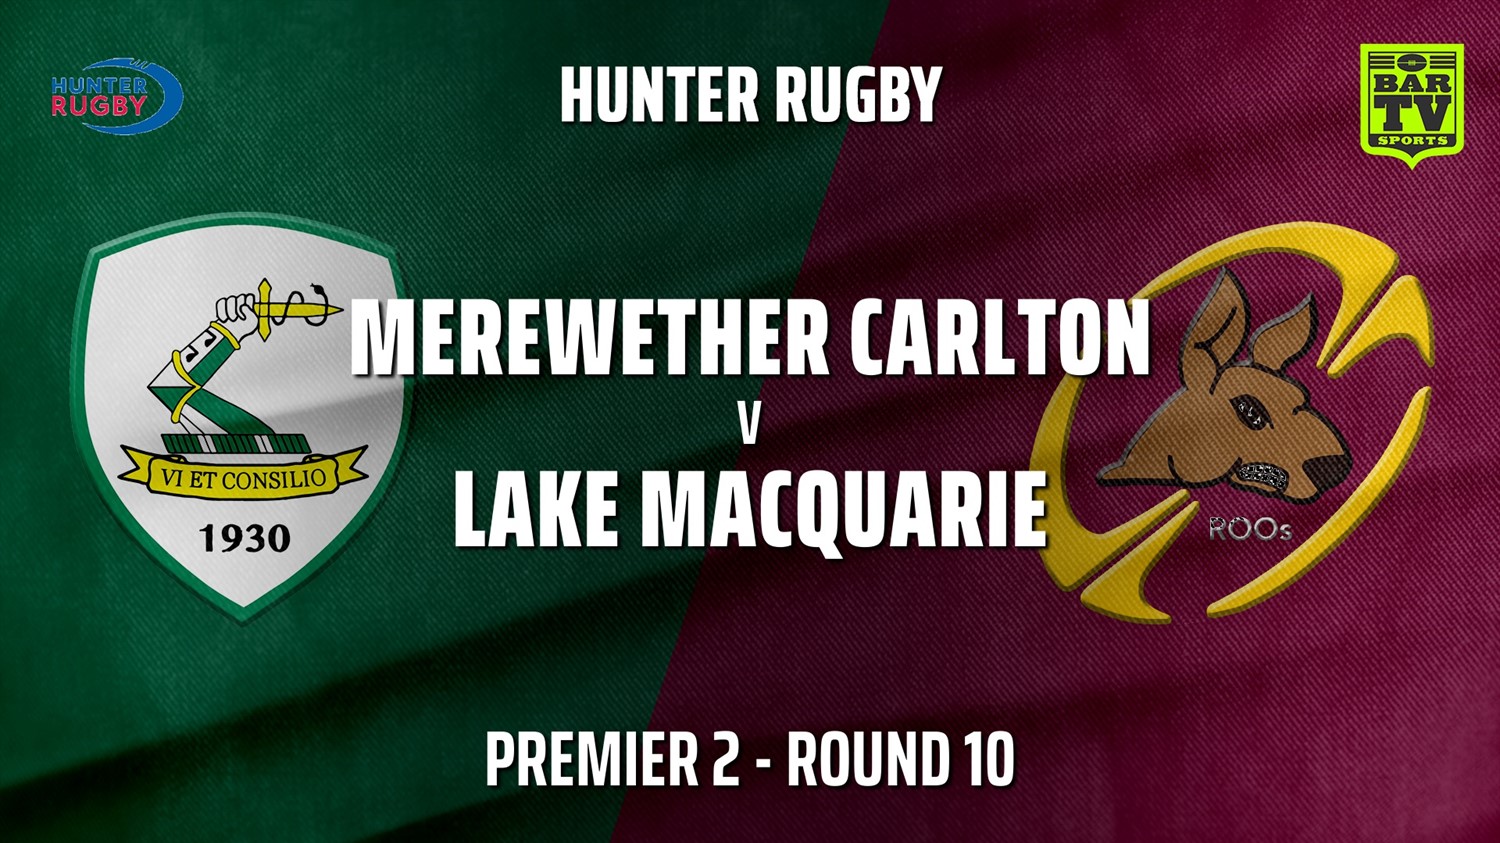 210626-Hunter Rugby Round 10 - Premier 2 - Merewether Carlton v Lake Macquarie Slate Image